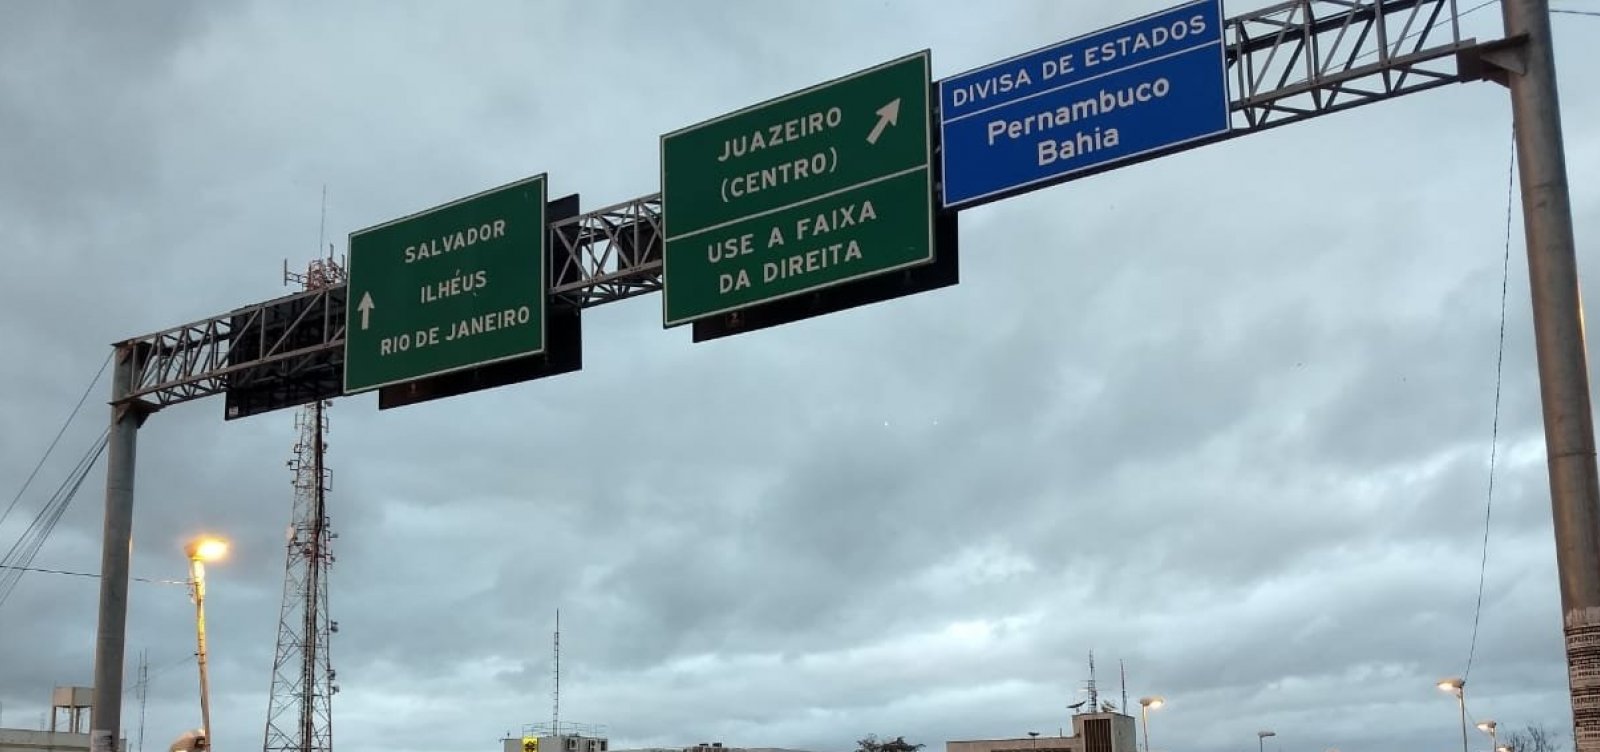 DNIT vai corrigir placa da divisa entre Bahia e Pernambuco